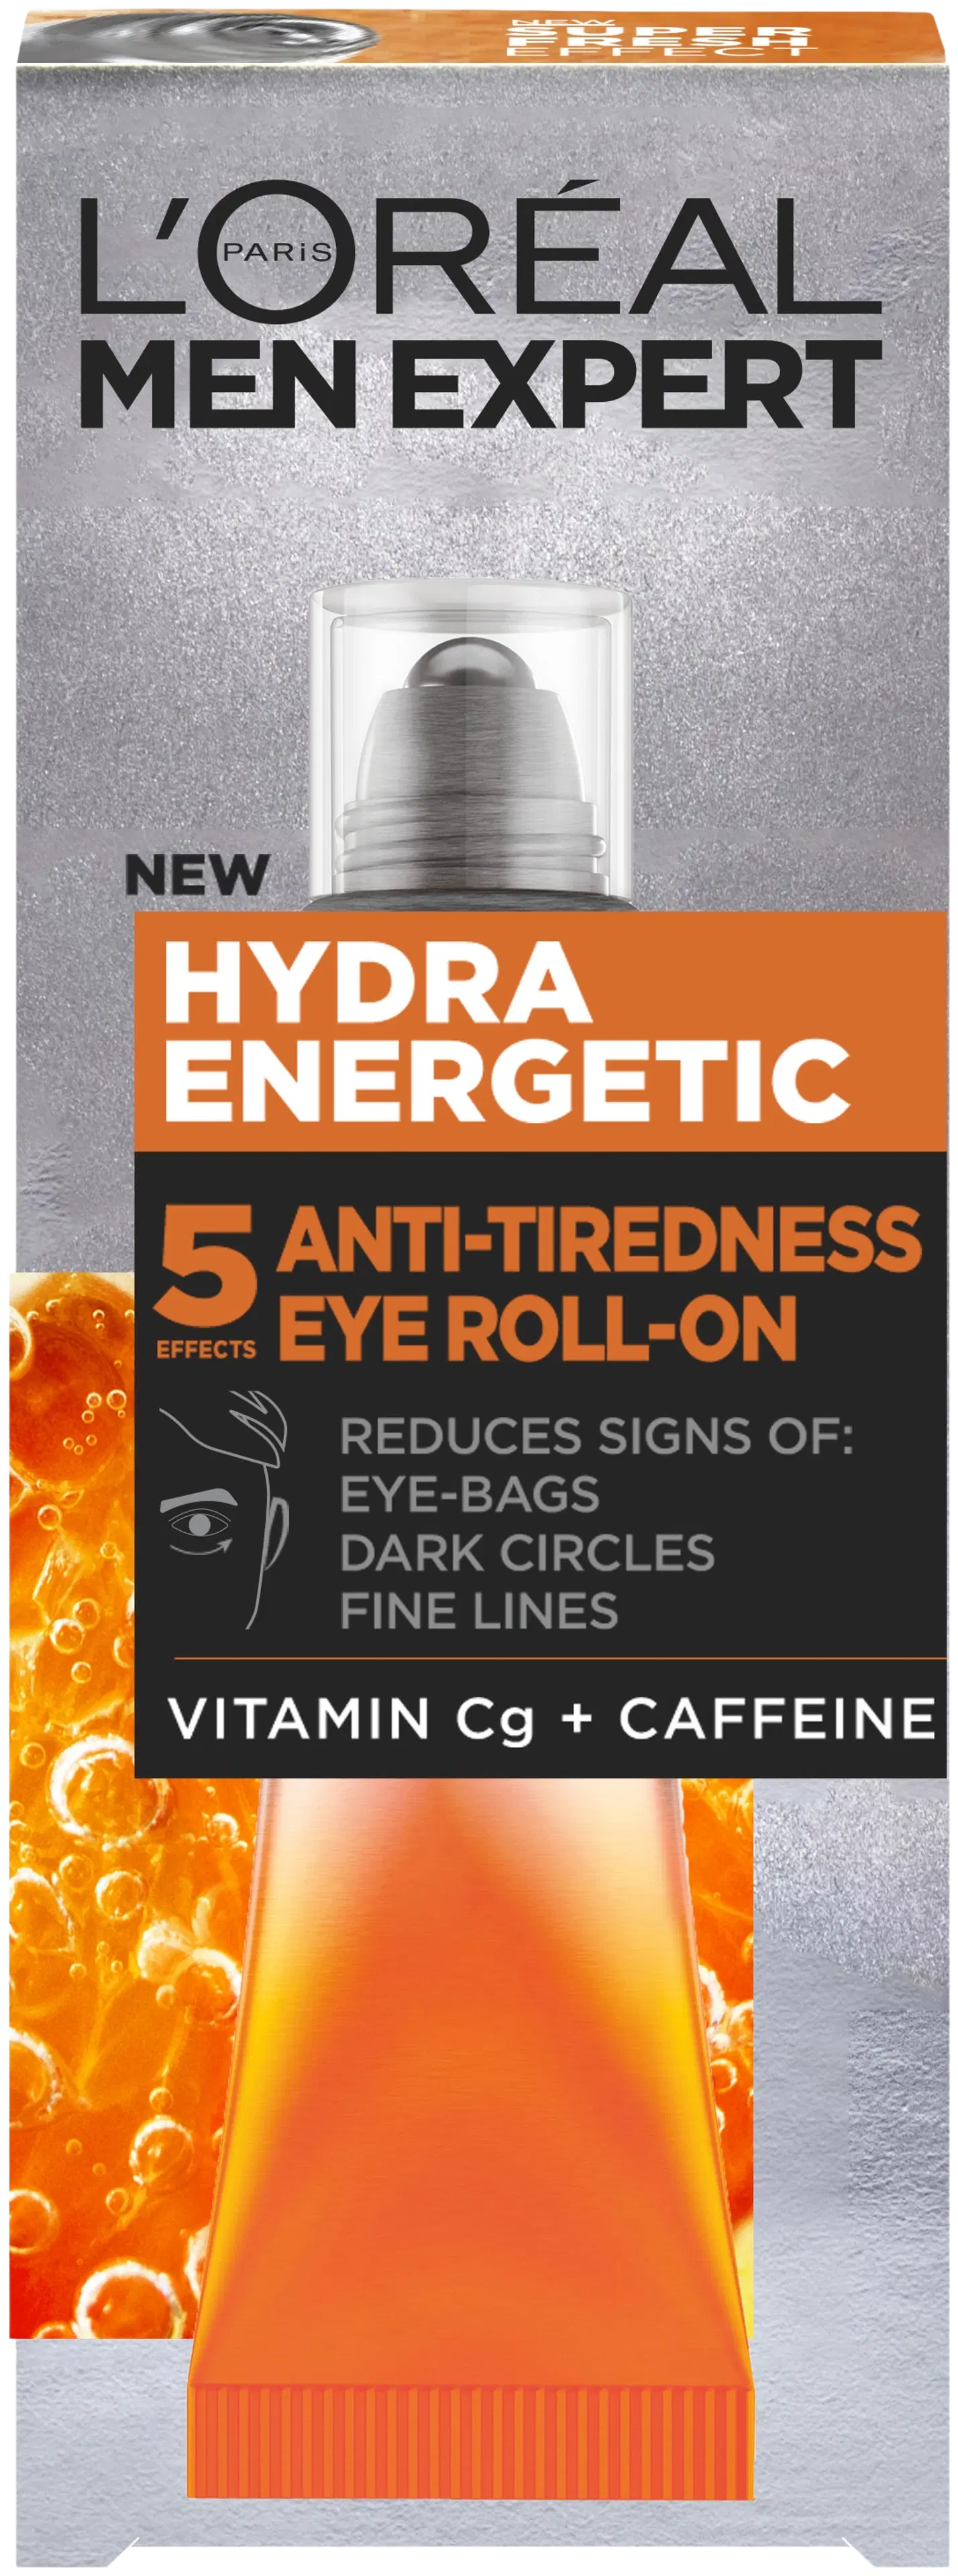 L'Oréal Paris Men Expert Hydra Energetic silmänympärys-roll-on väsyneille silmille 10ml